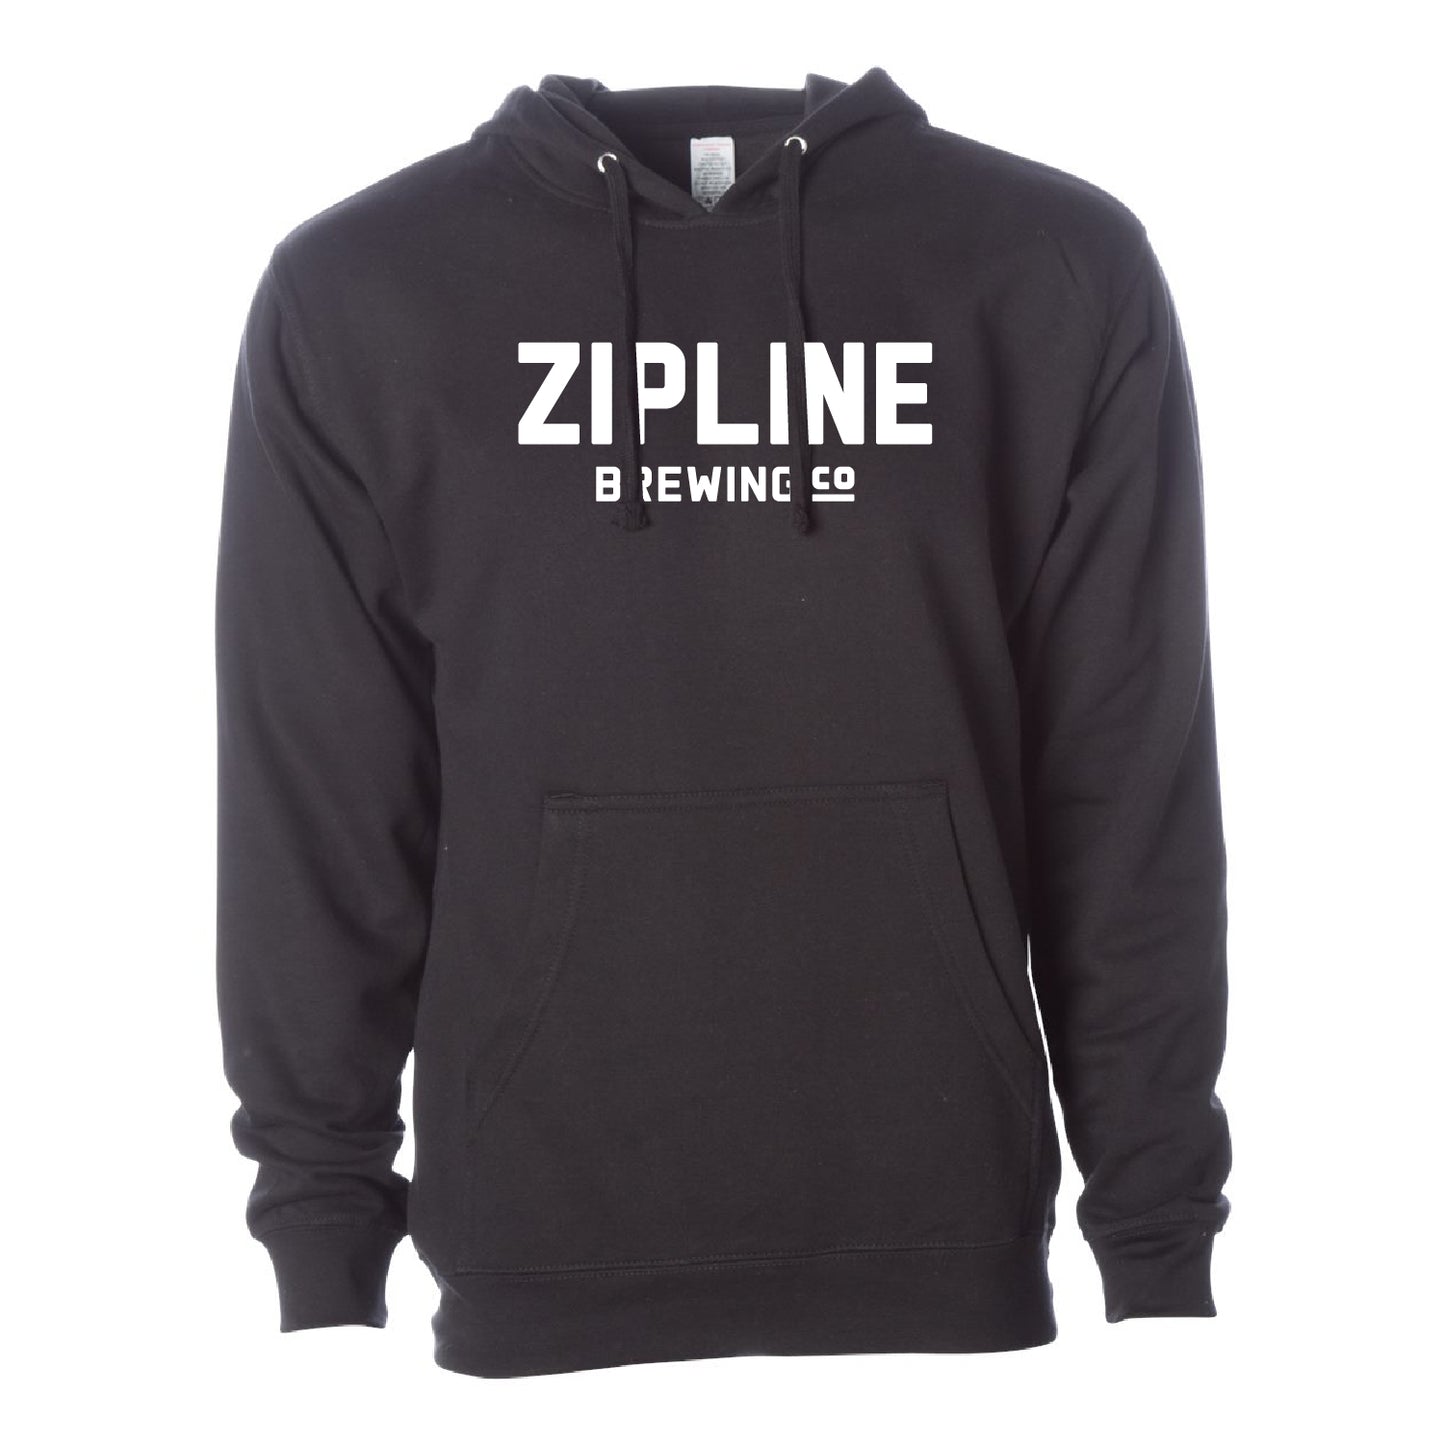 Zipline Brewing Co. Unisex Midweight Hooded Sweatshirt